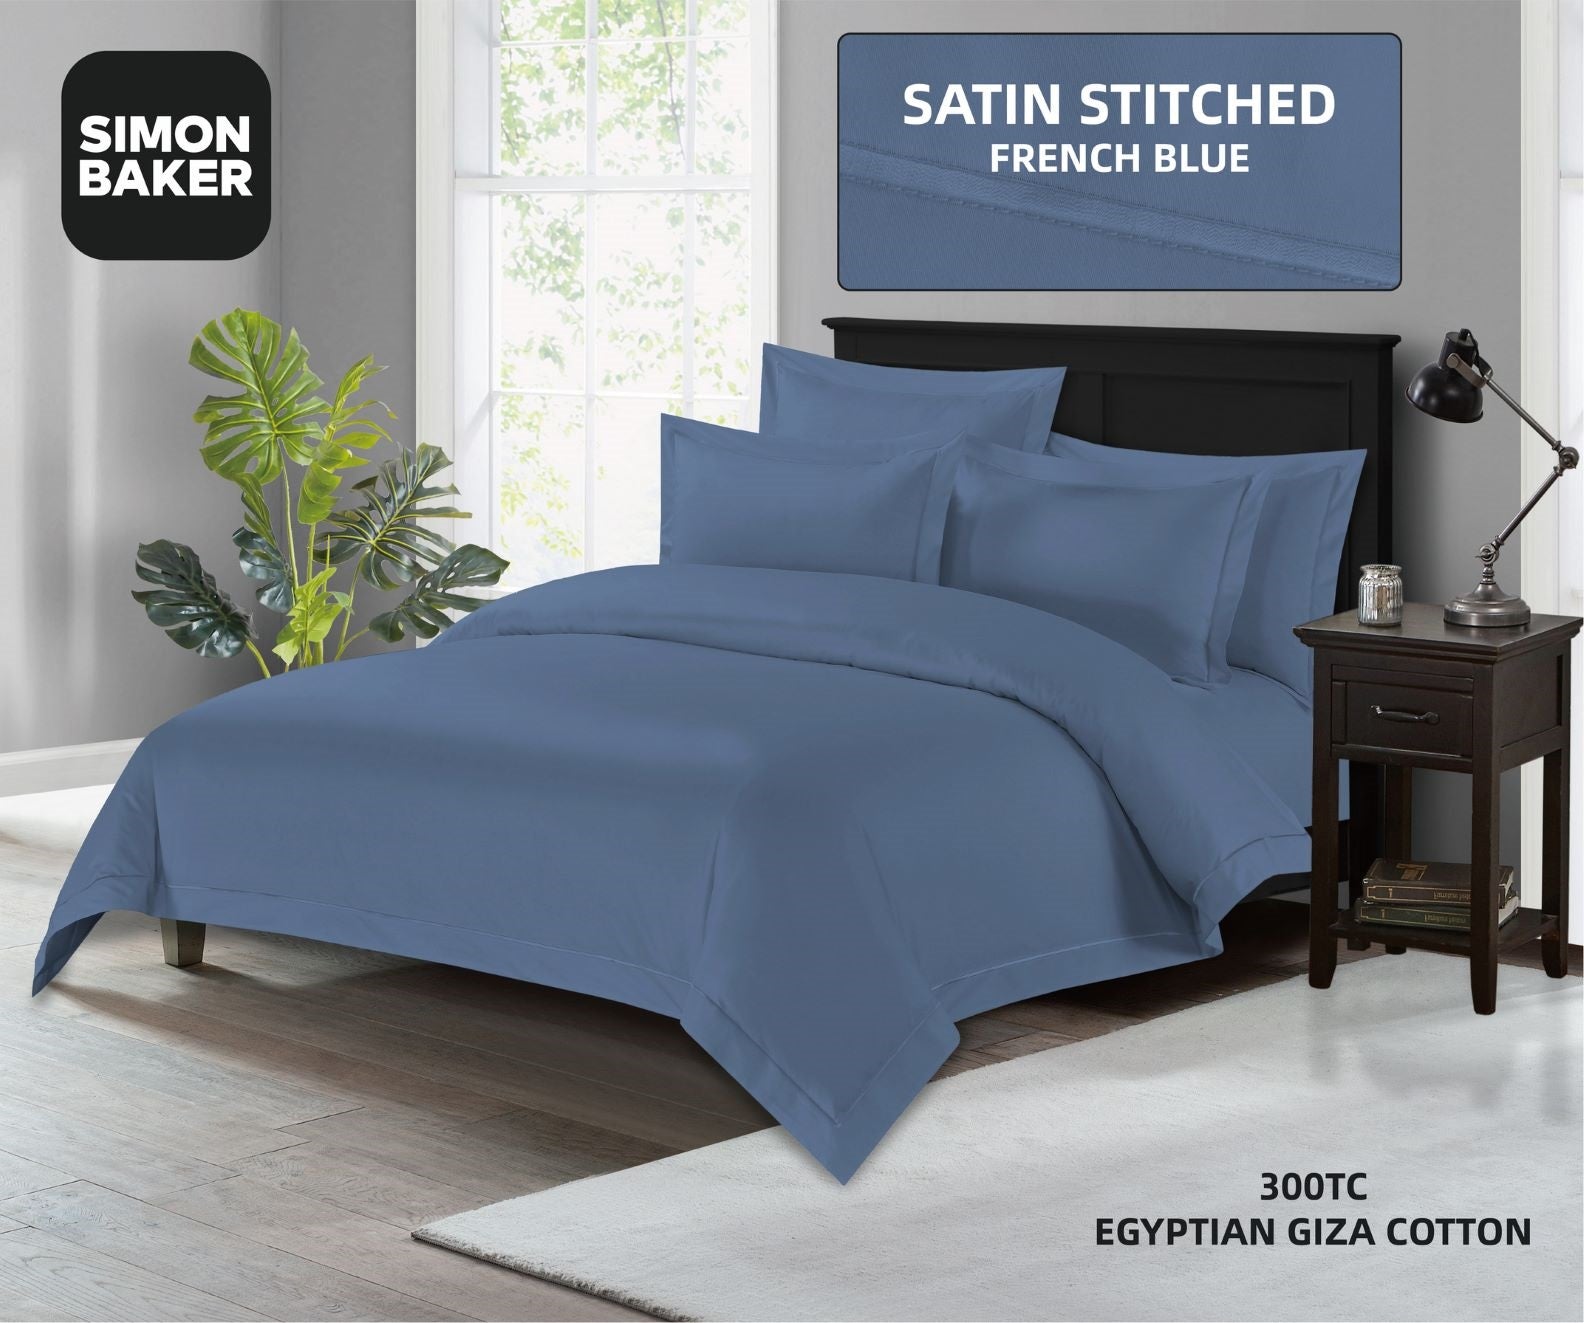 Simon Baker | 300TC 100% Egyptian Cotton Oxford Satin Stitched Duvet Cover French Blue (Various Sizes)